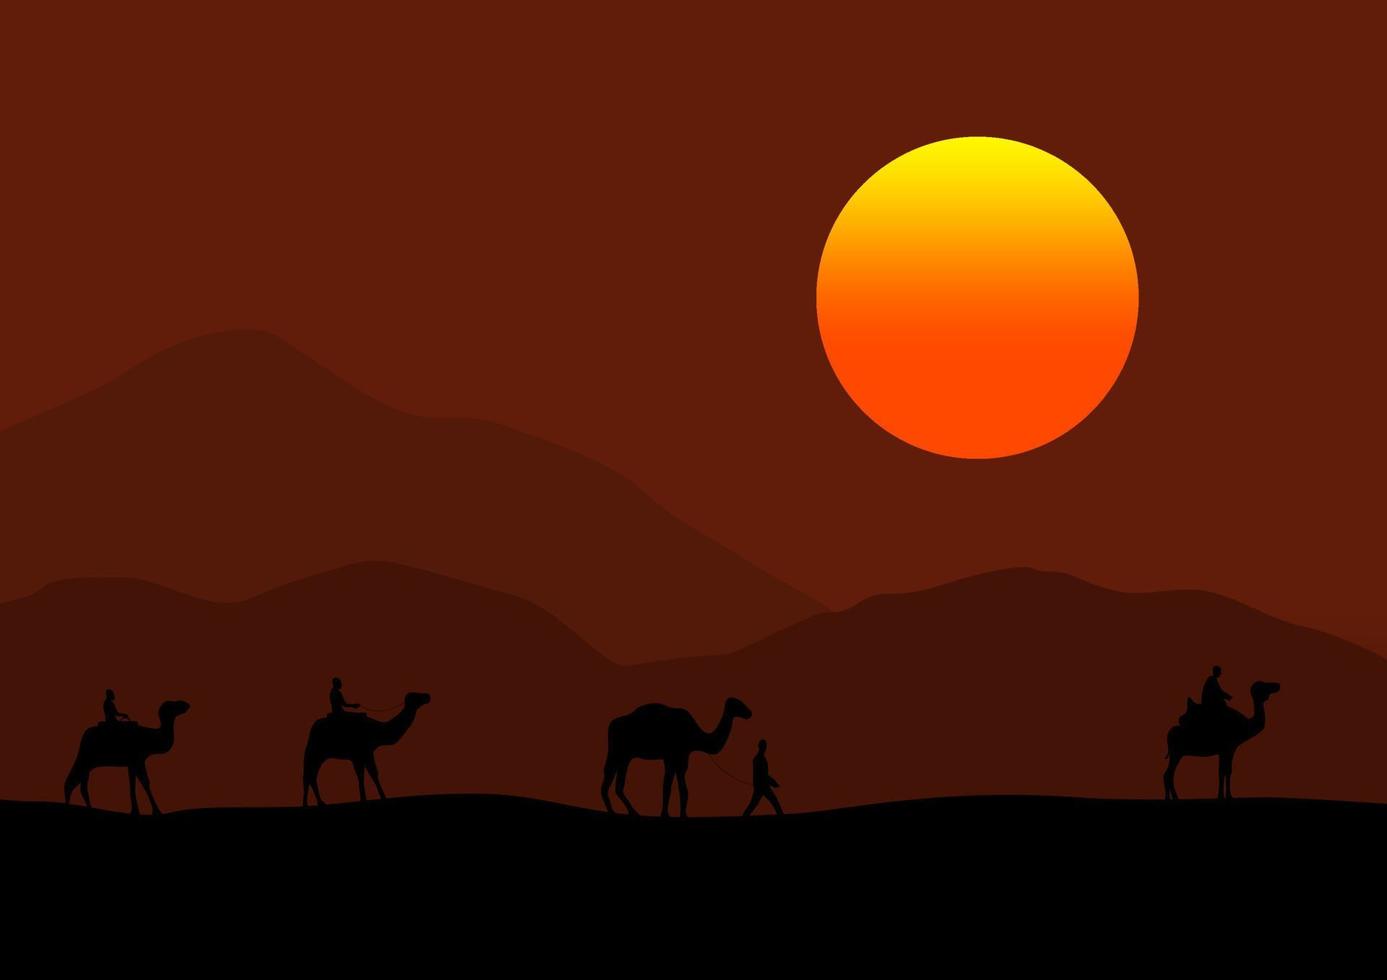 camels in the desert at sunset, vector illustration.